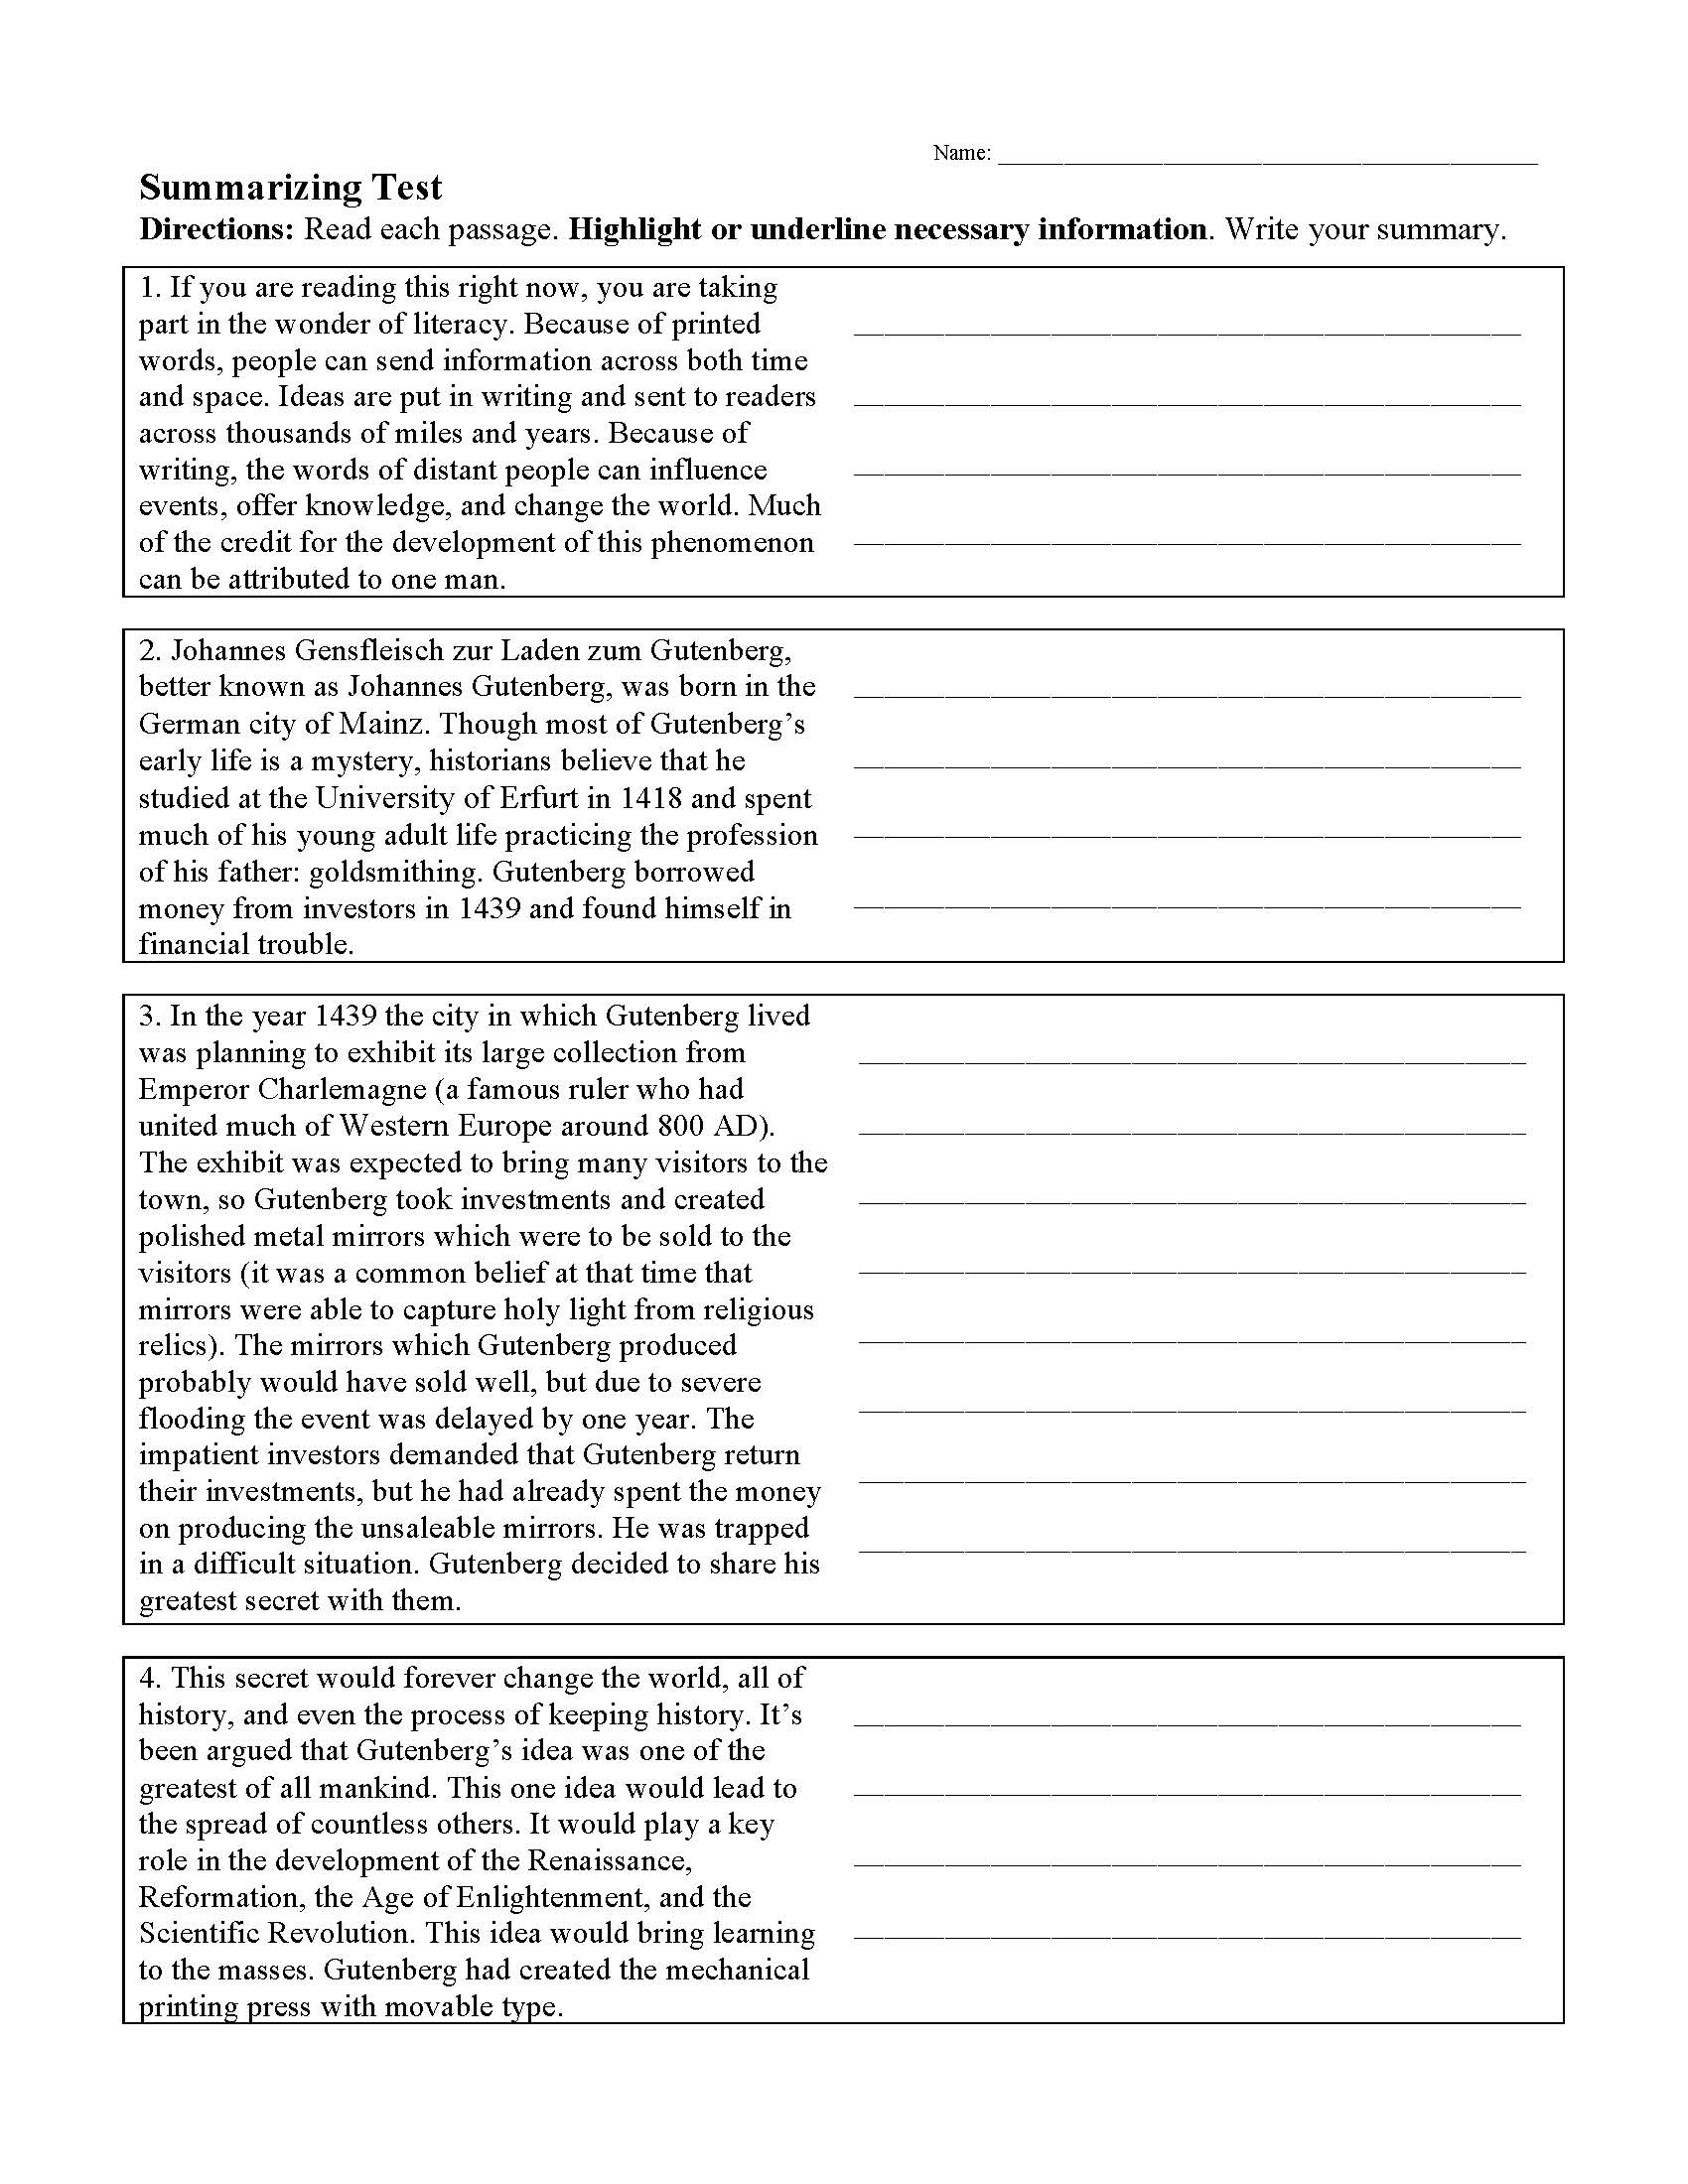 summarize-it-2nd-grade-reading-comprehension-worksheets-browse